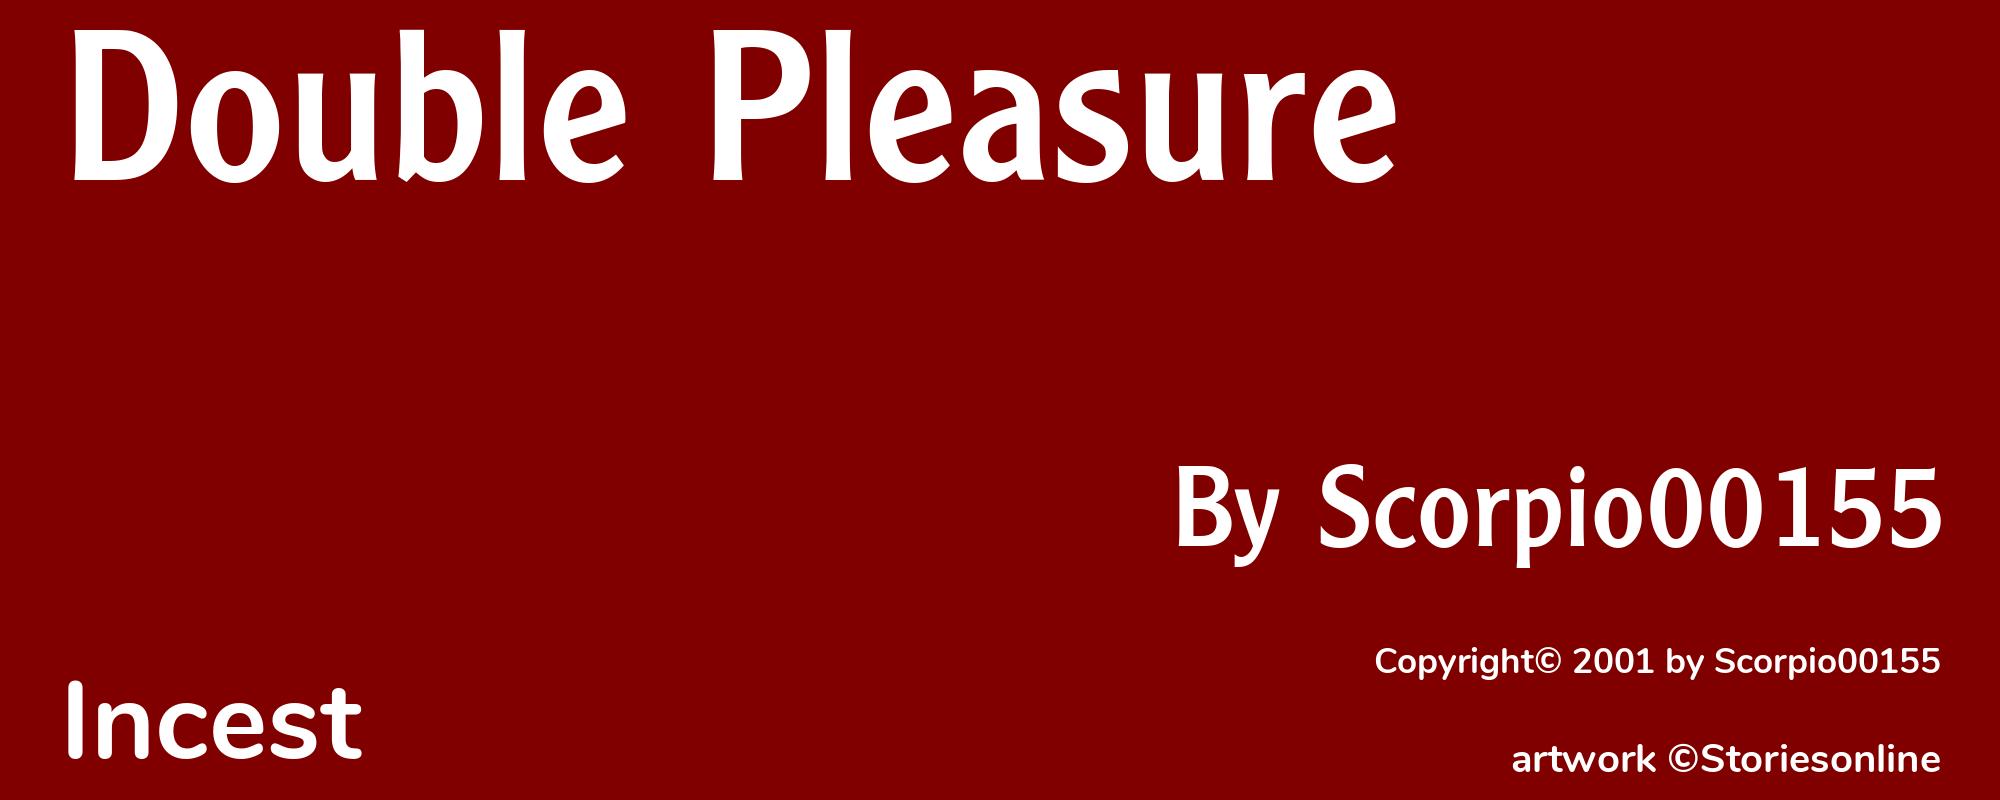 Double Pleasure - Cover